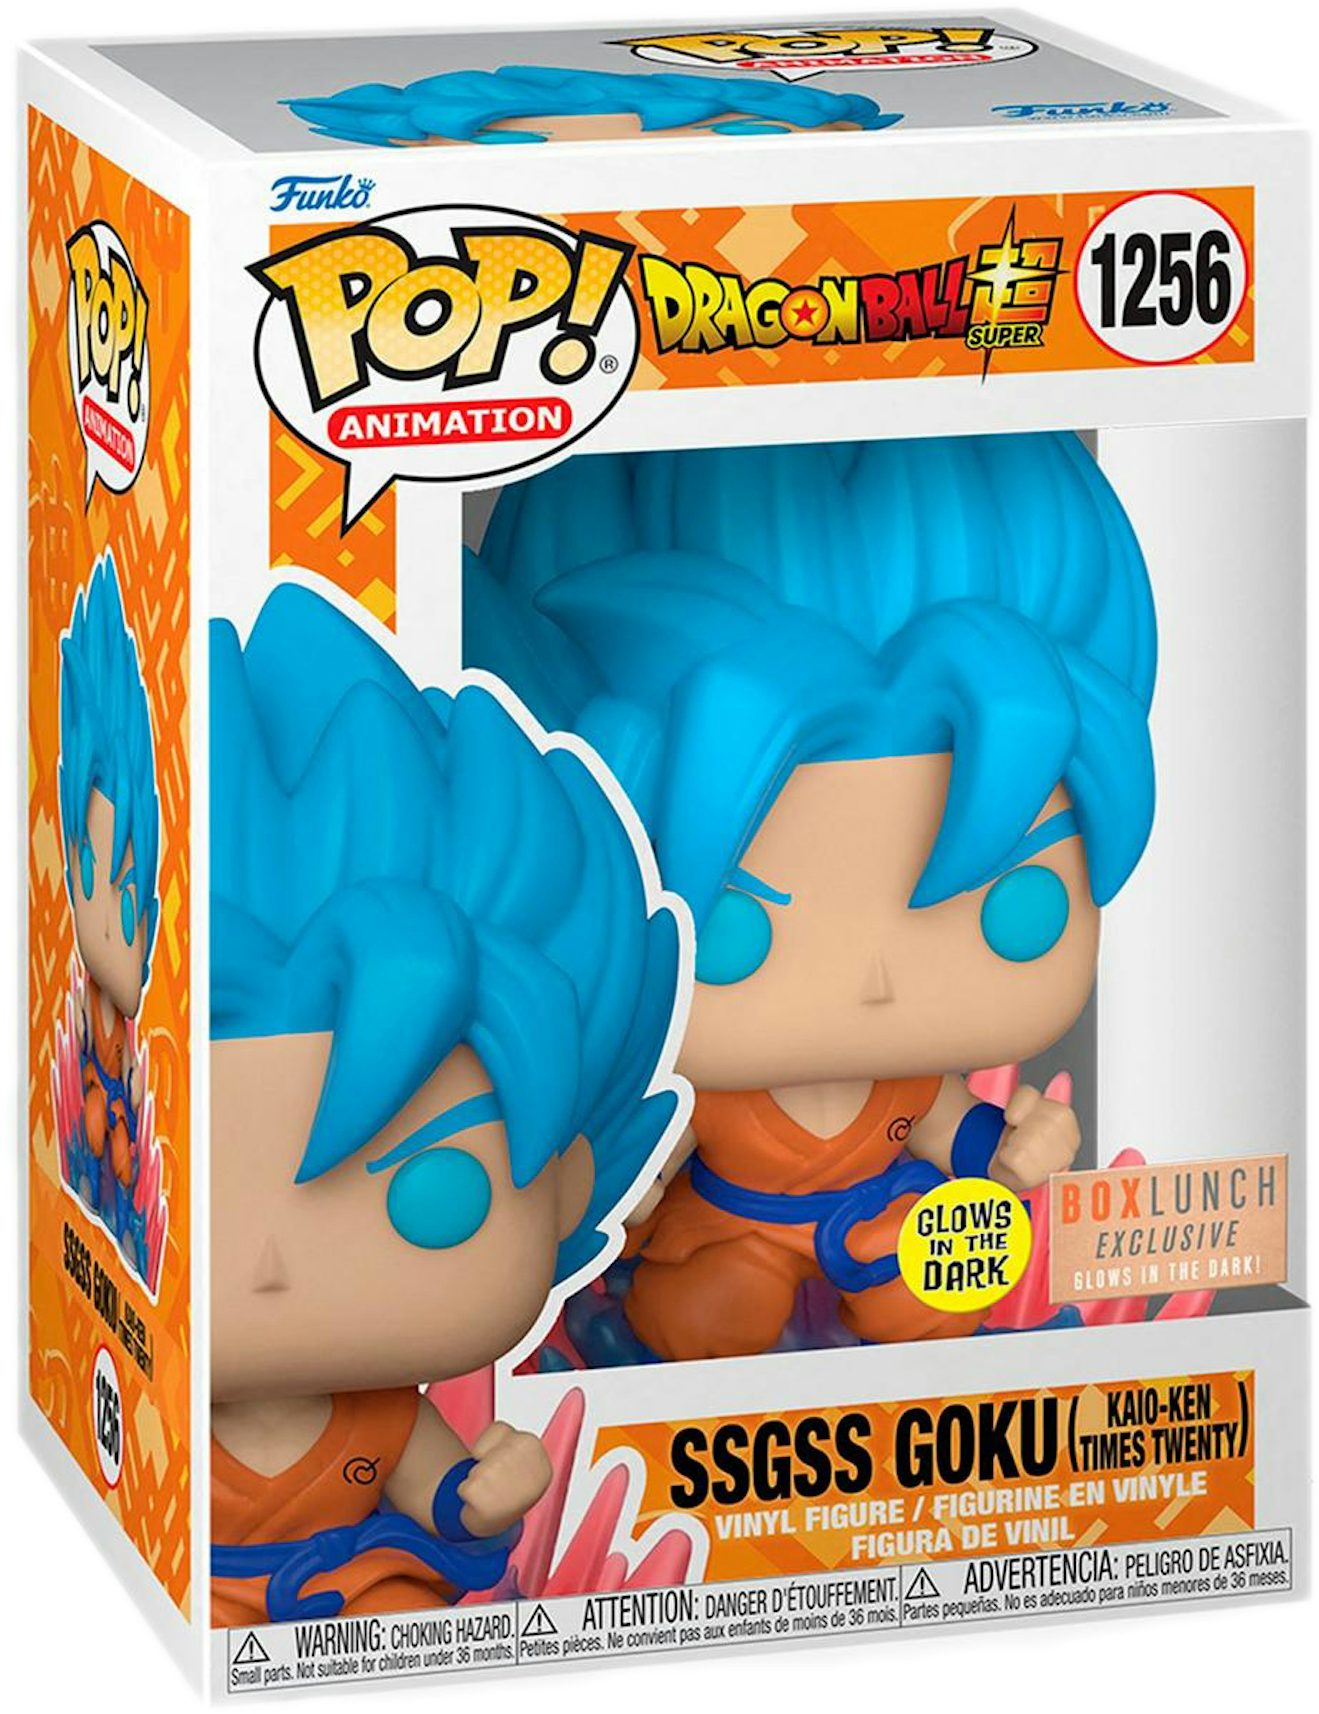 Funko Pop! Animation Dragon Ball Z SSGSS Goku (Kaio-Ken Times